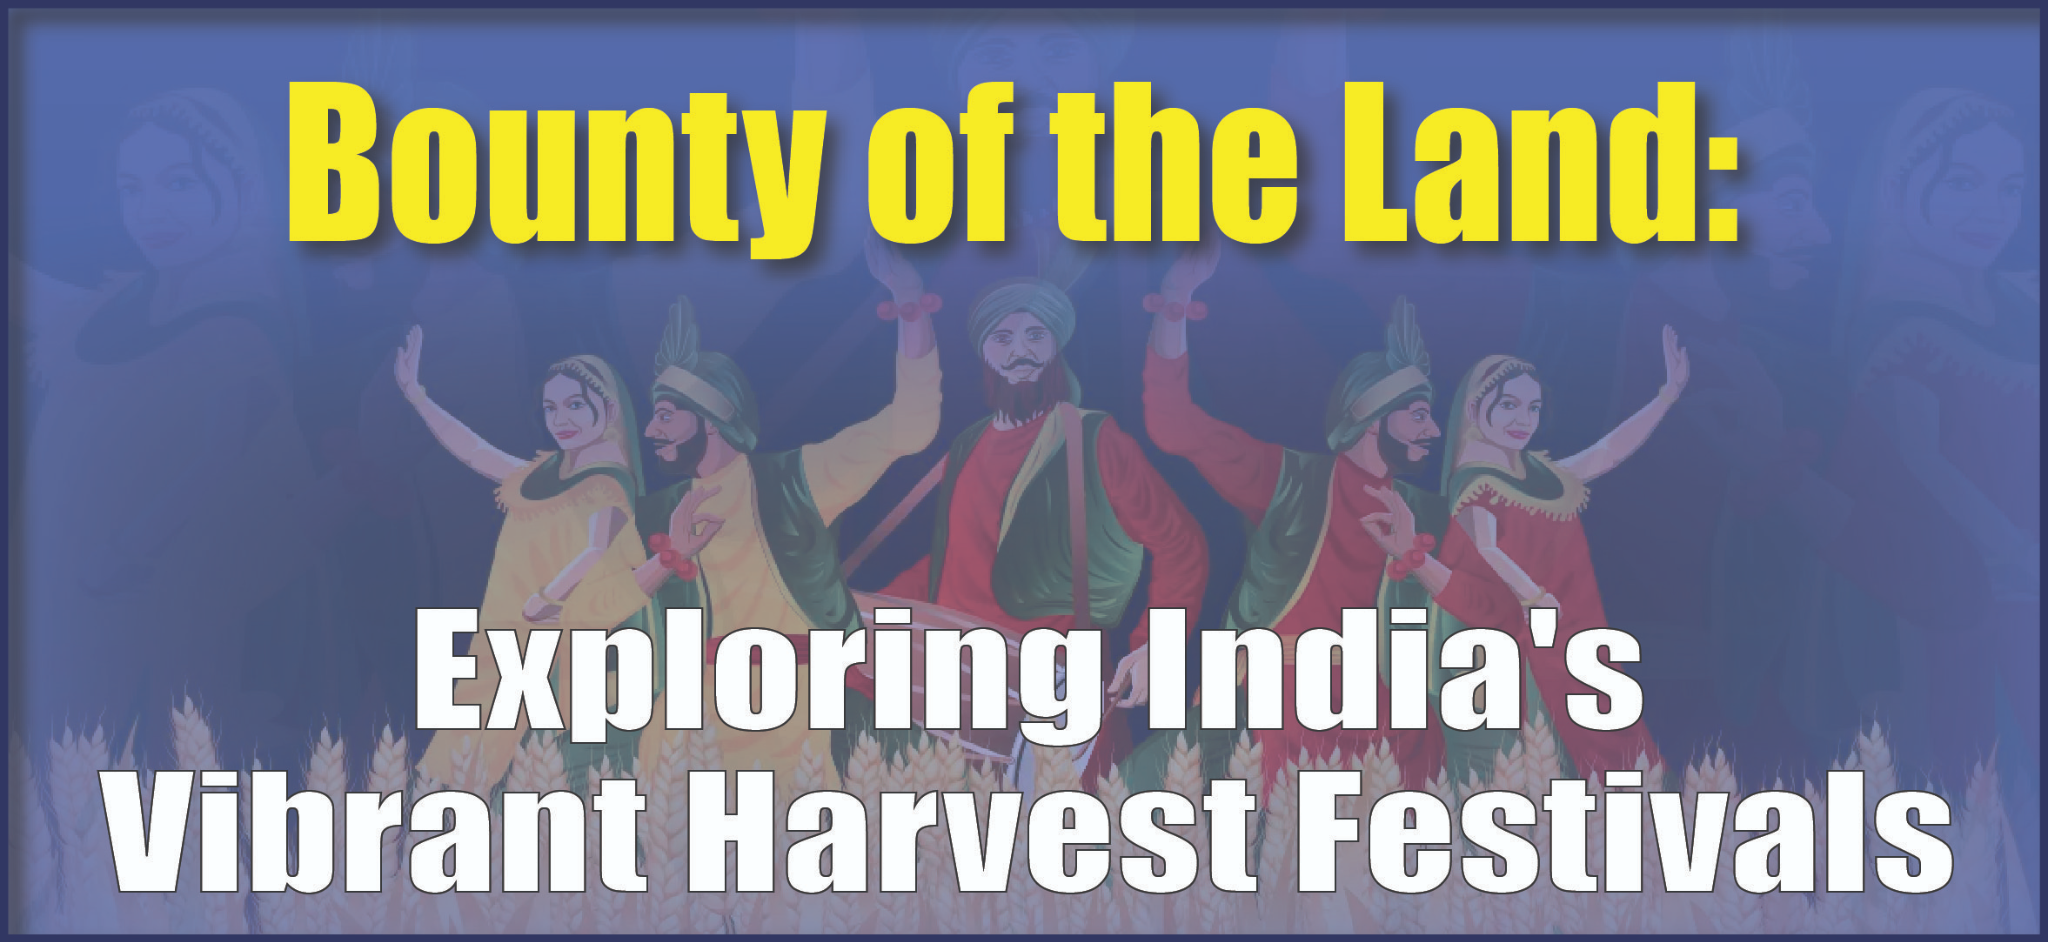 Blog on Bounty of the Land: Exploring India's Vibrant Harvest Festivals